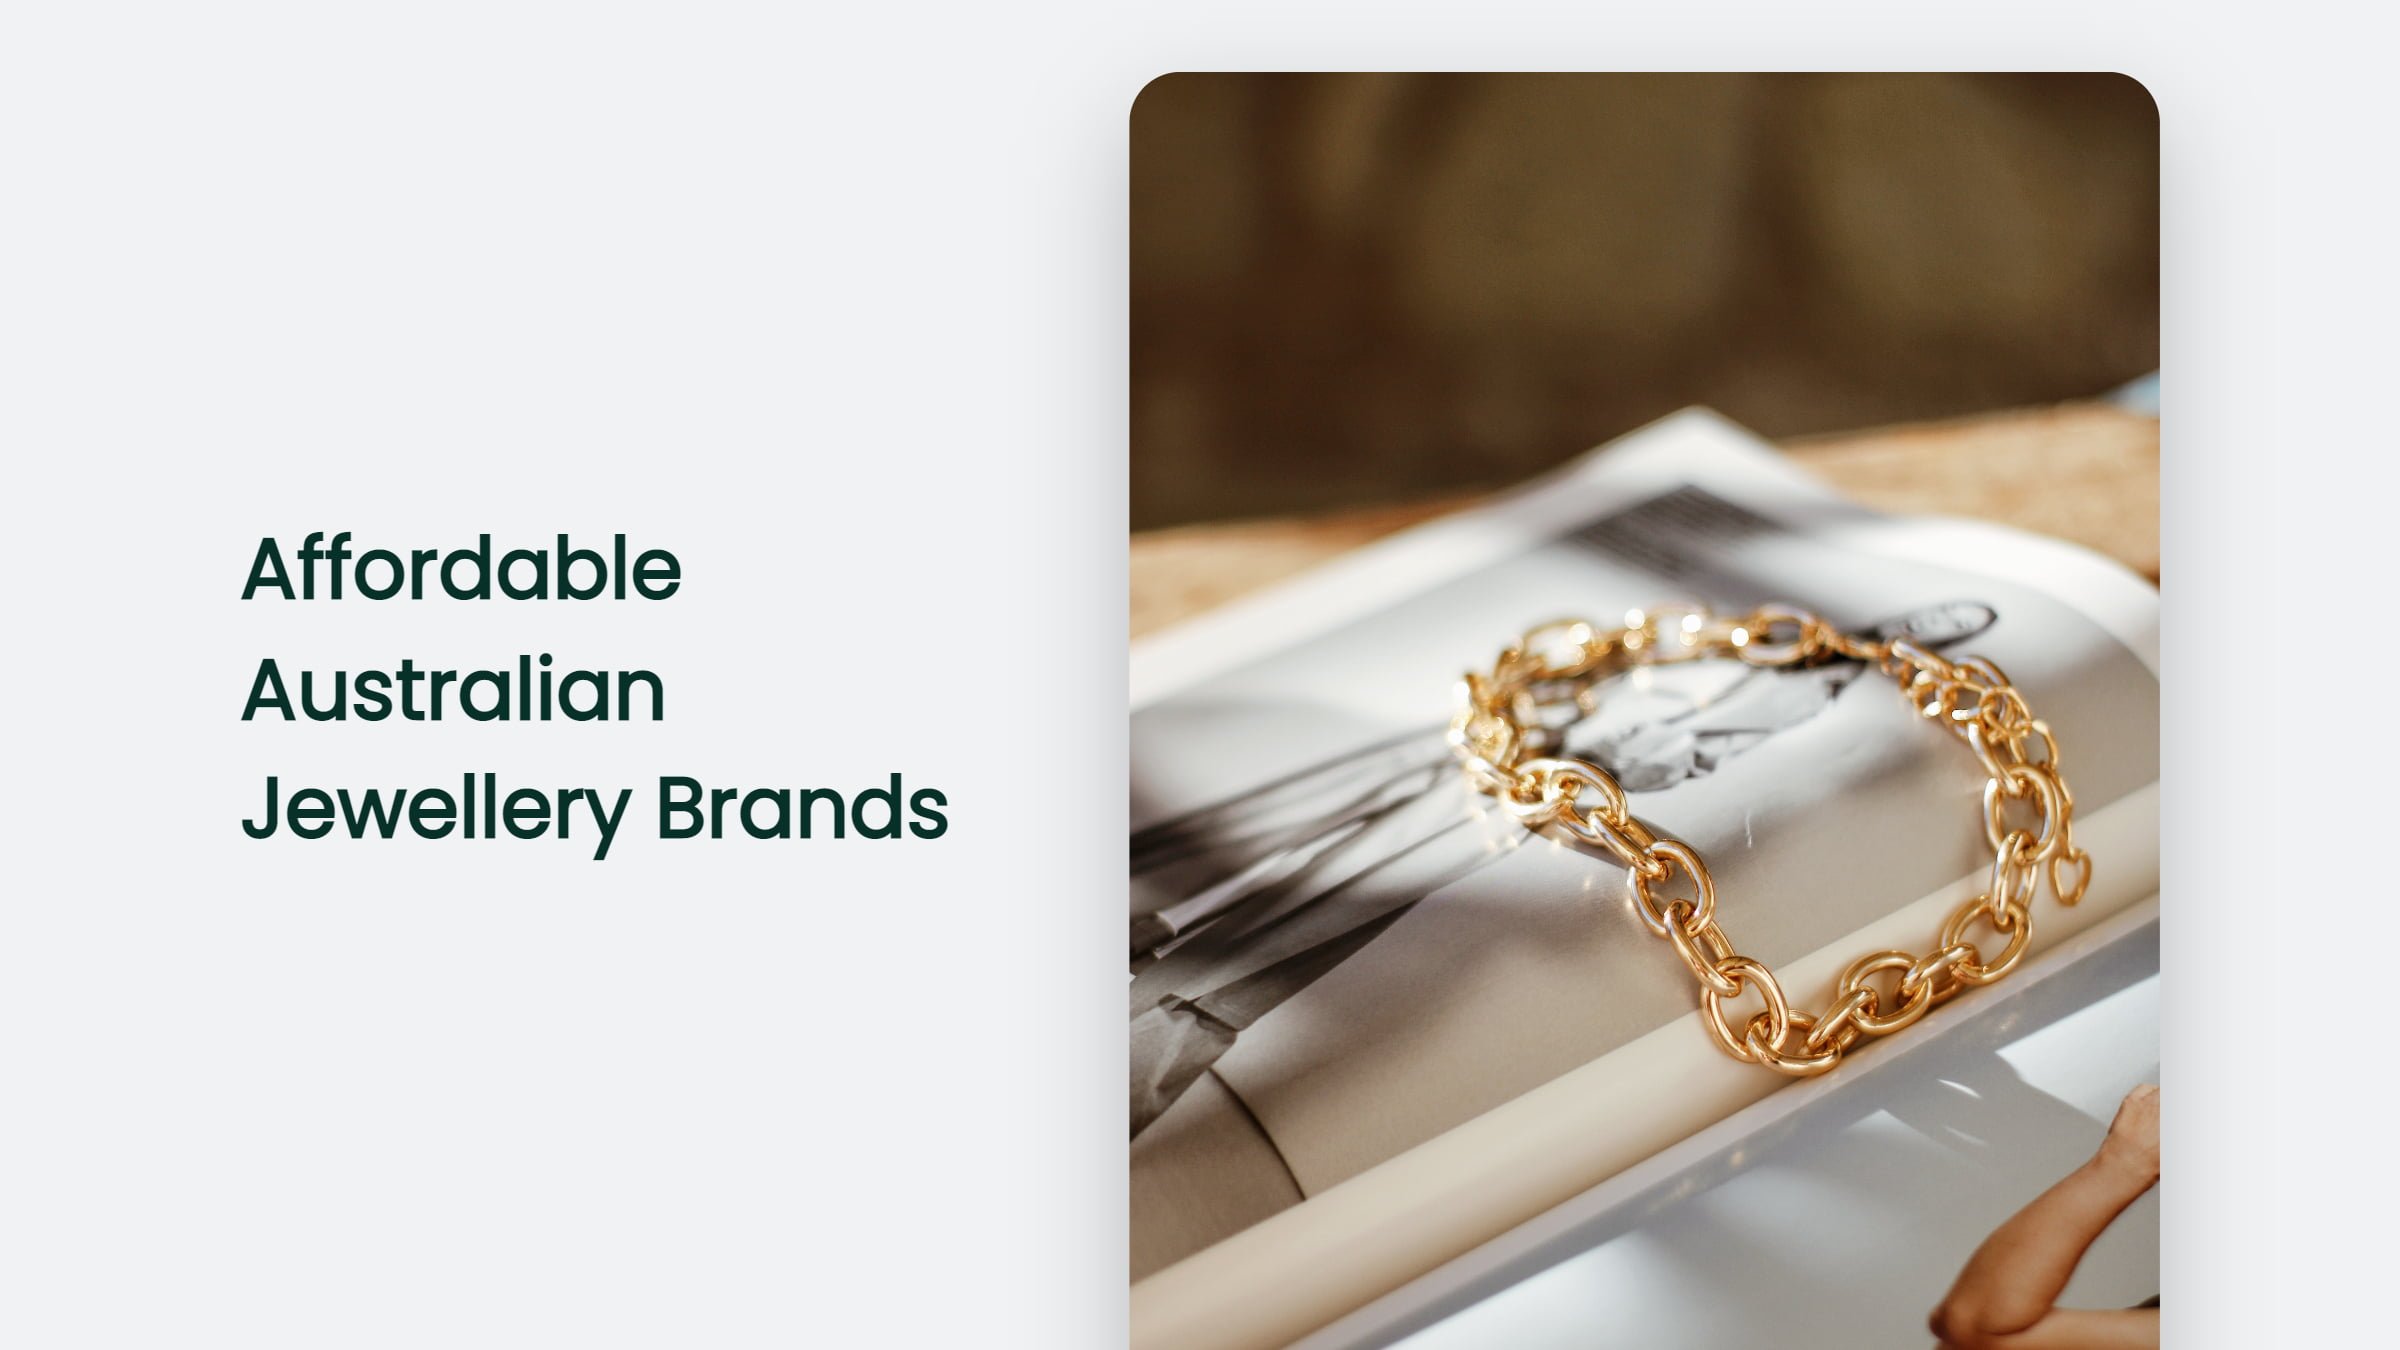 Affordable Australian Jewellery Brands 2023 Affordable Australian Jewellery Brands